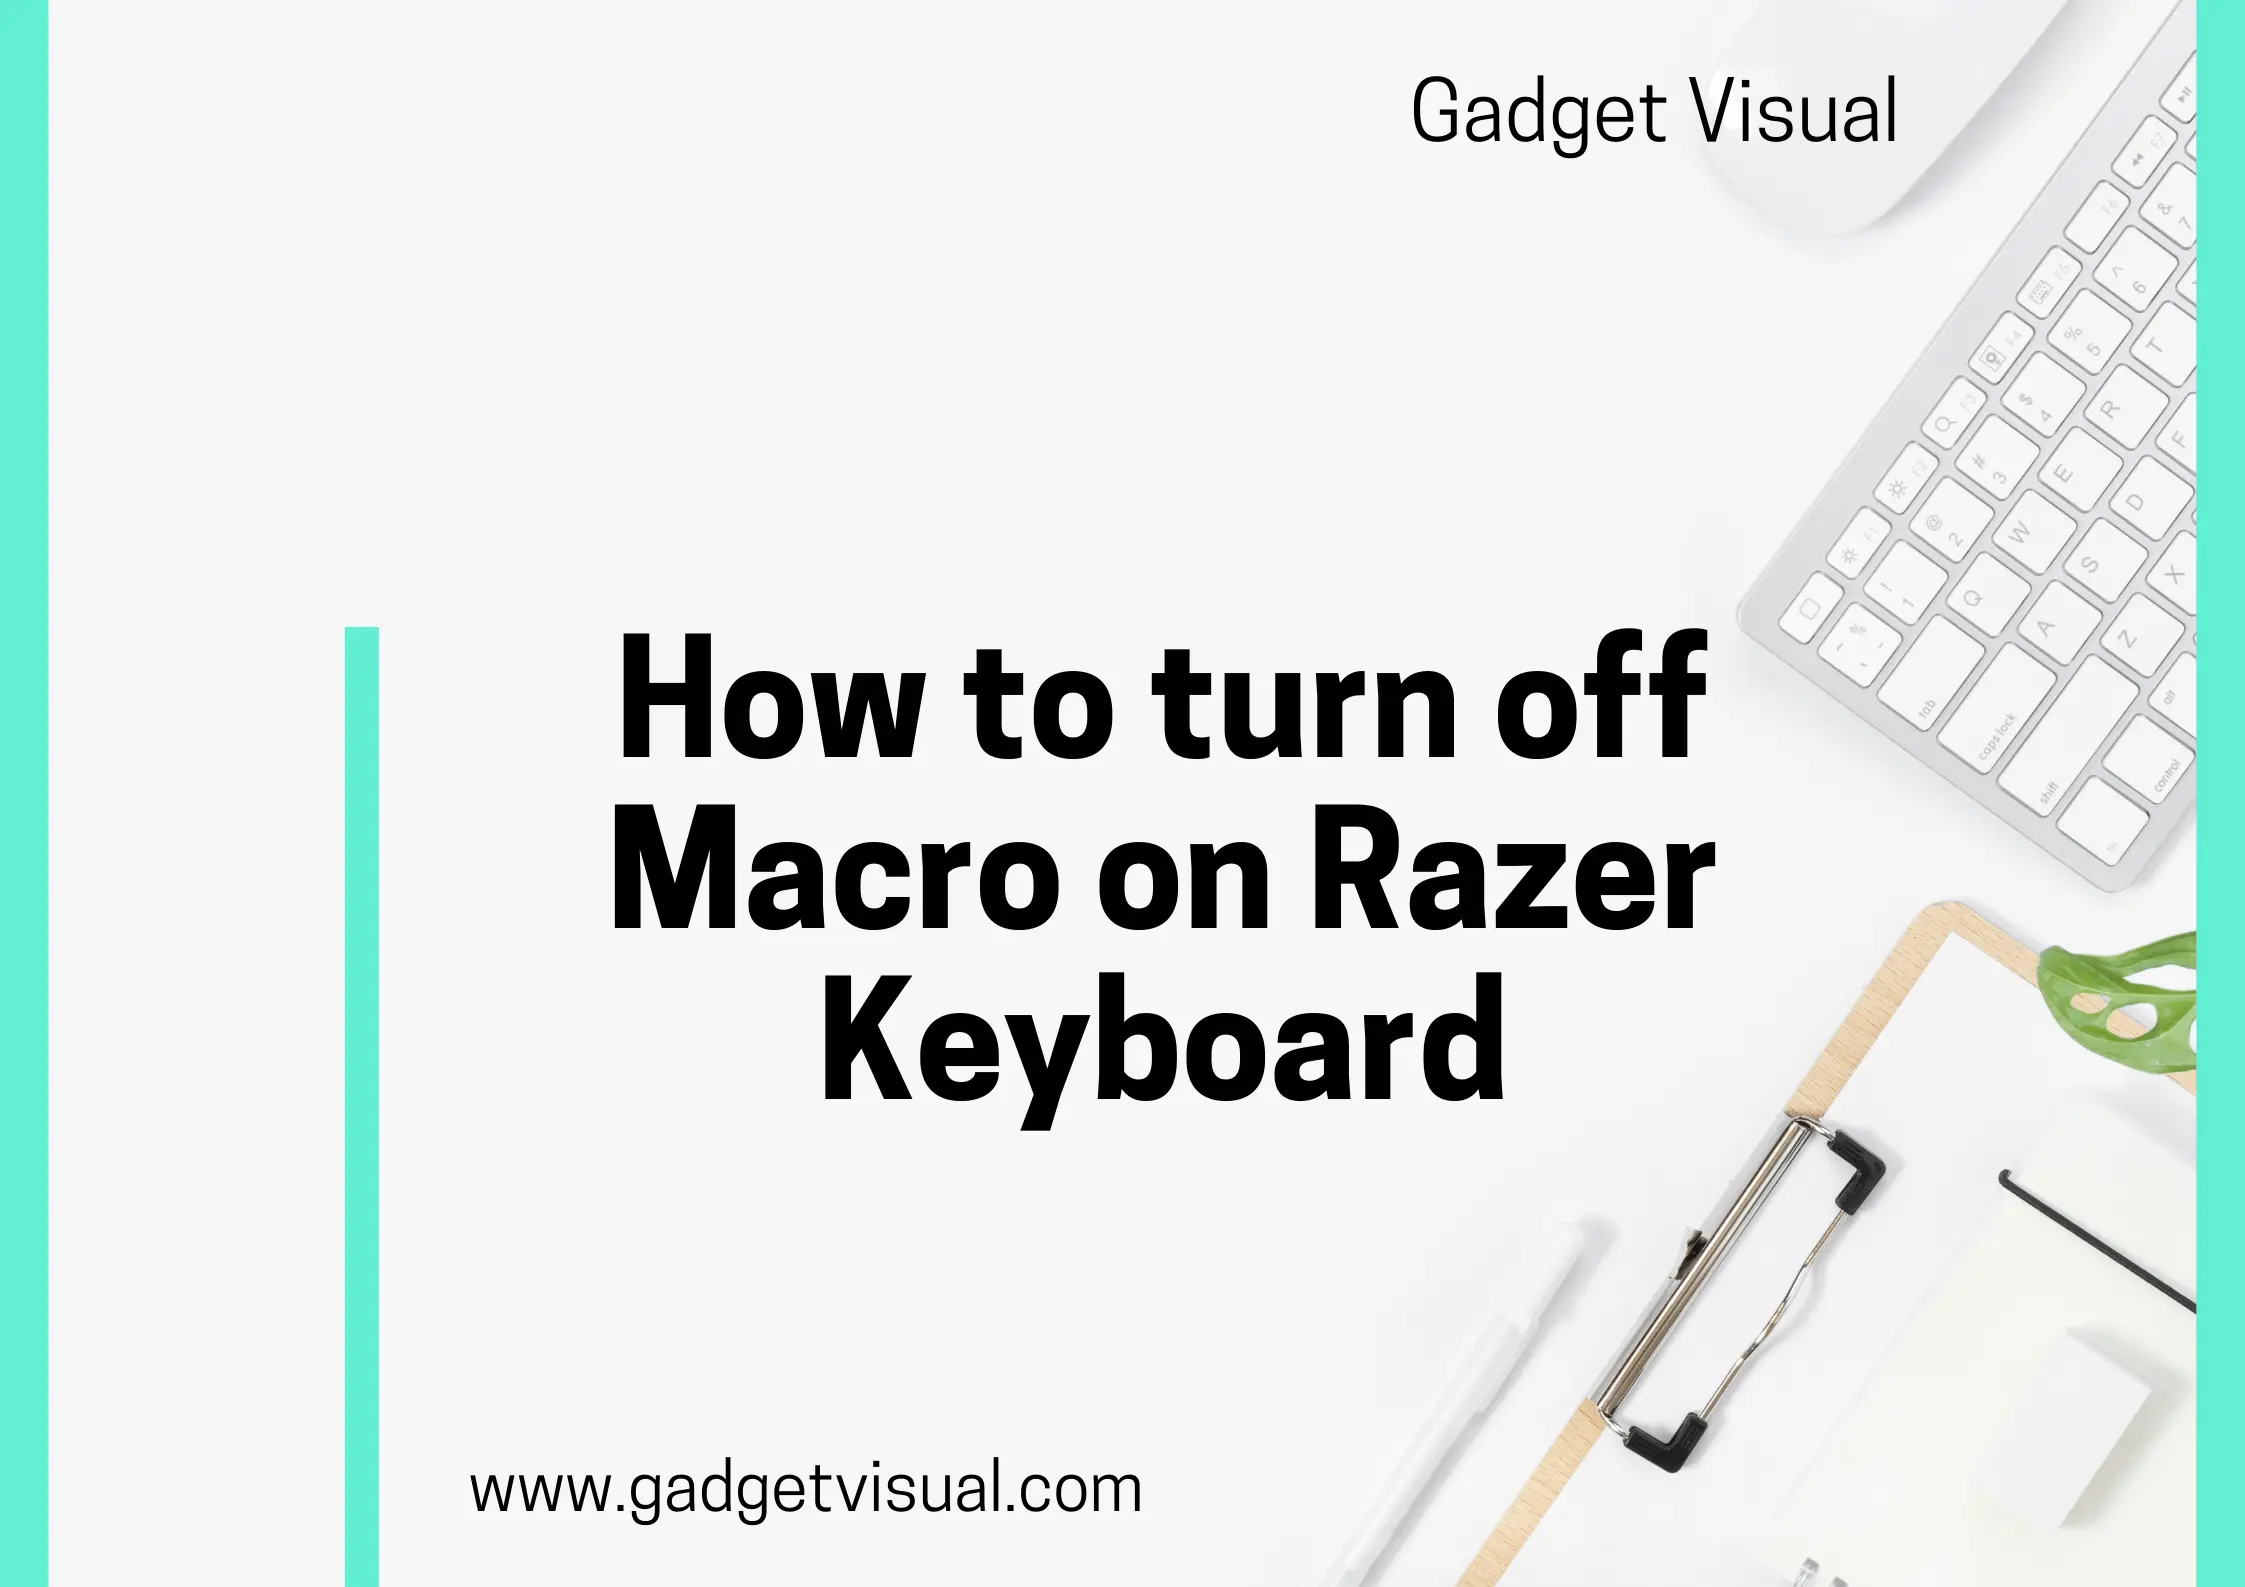 How to turn off Macro on Razer Keyboard